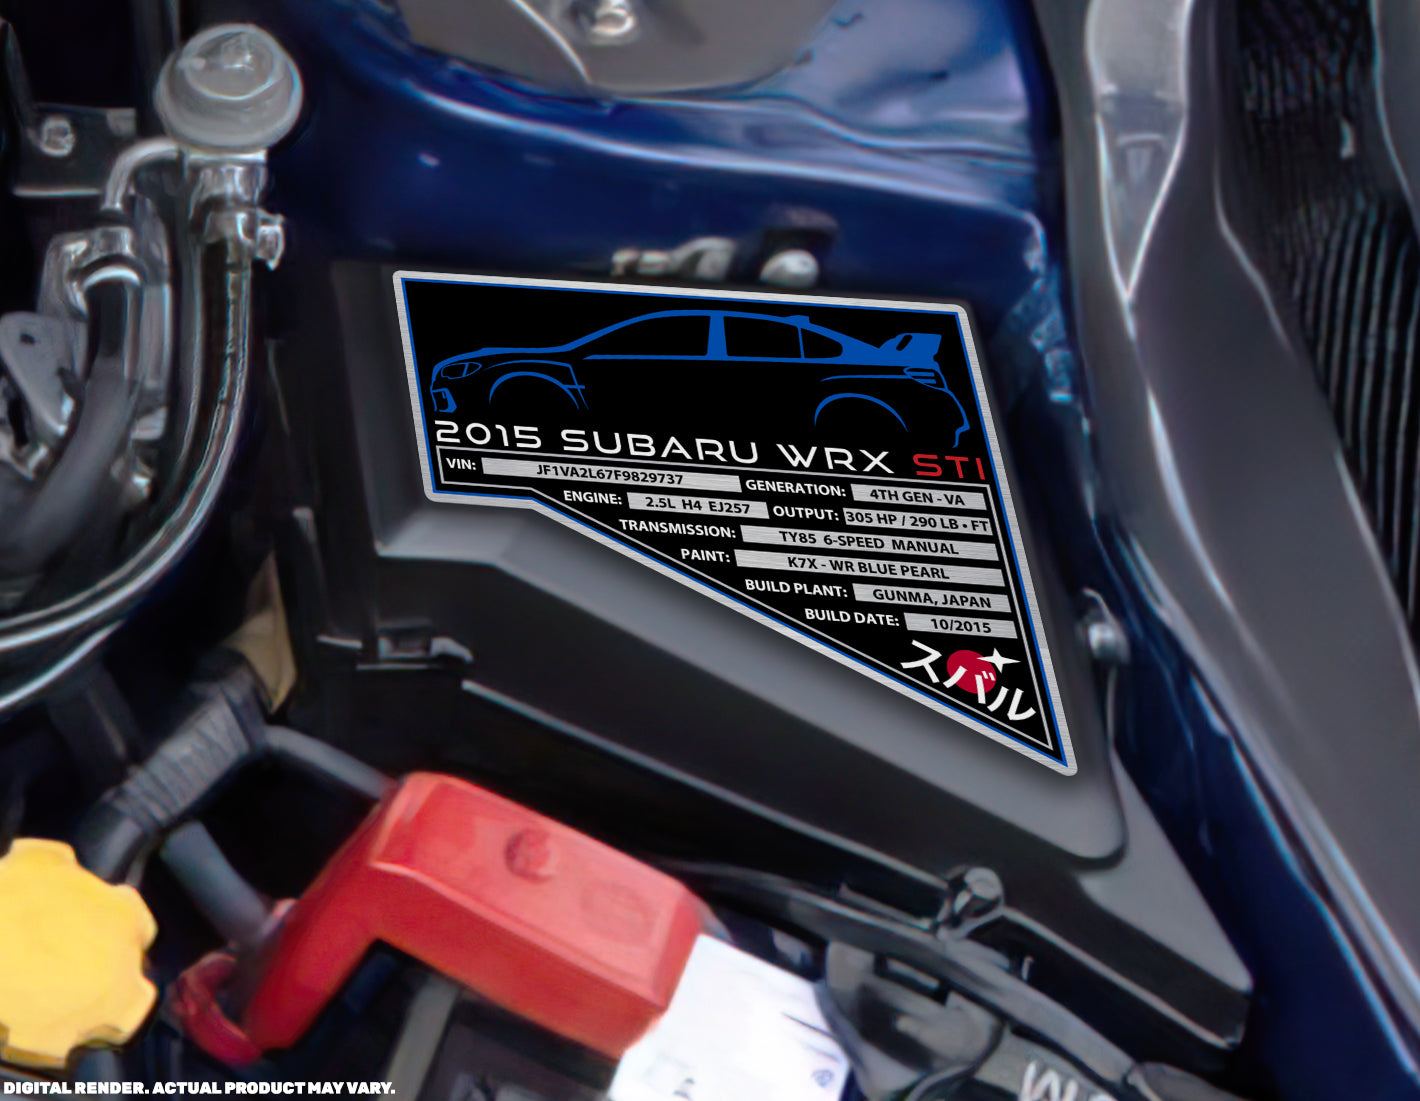 2020 SUBARU WRX STI Engine Bay Build Plaque